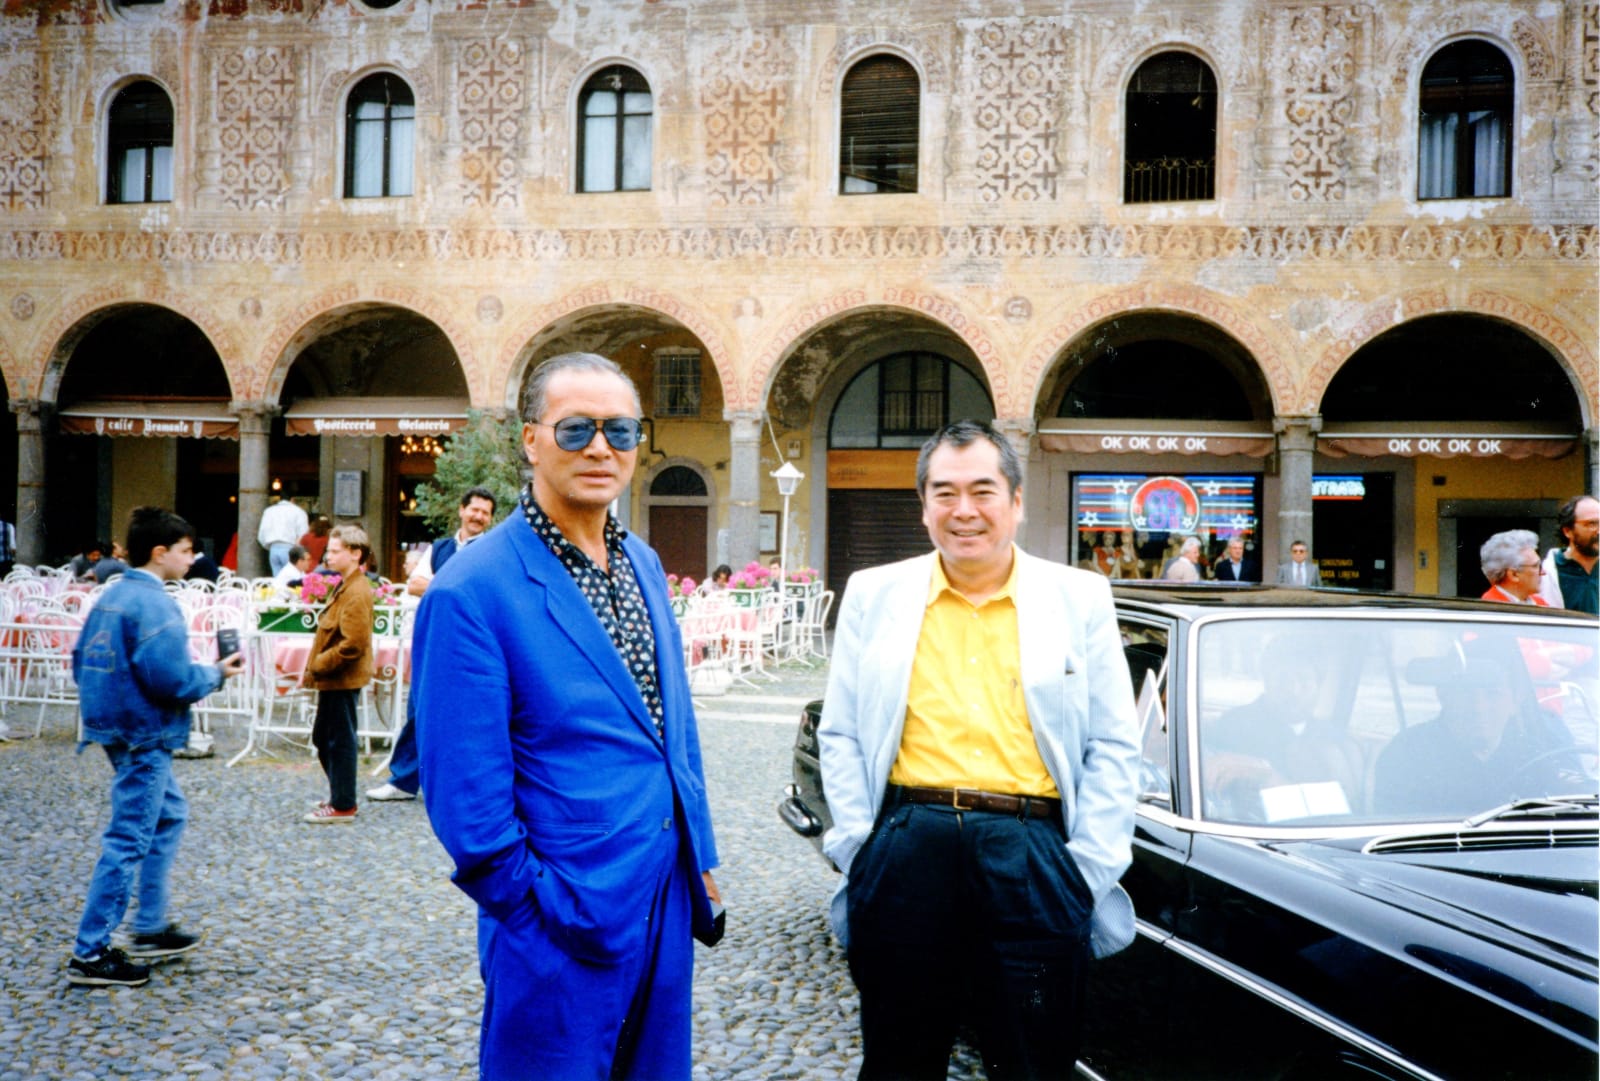 1990, Hsiao Chin with Walasse Ting 1990年蕭勤與丁雄泉合影